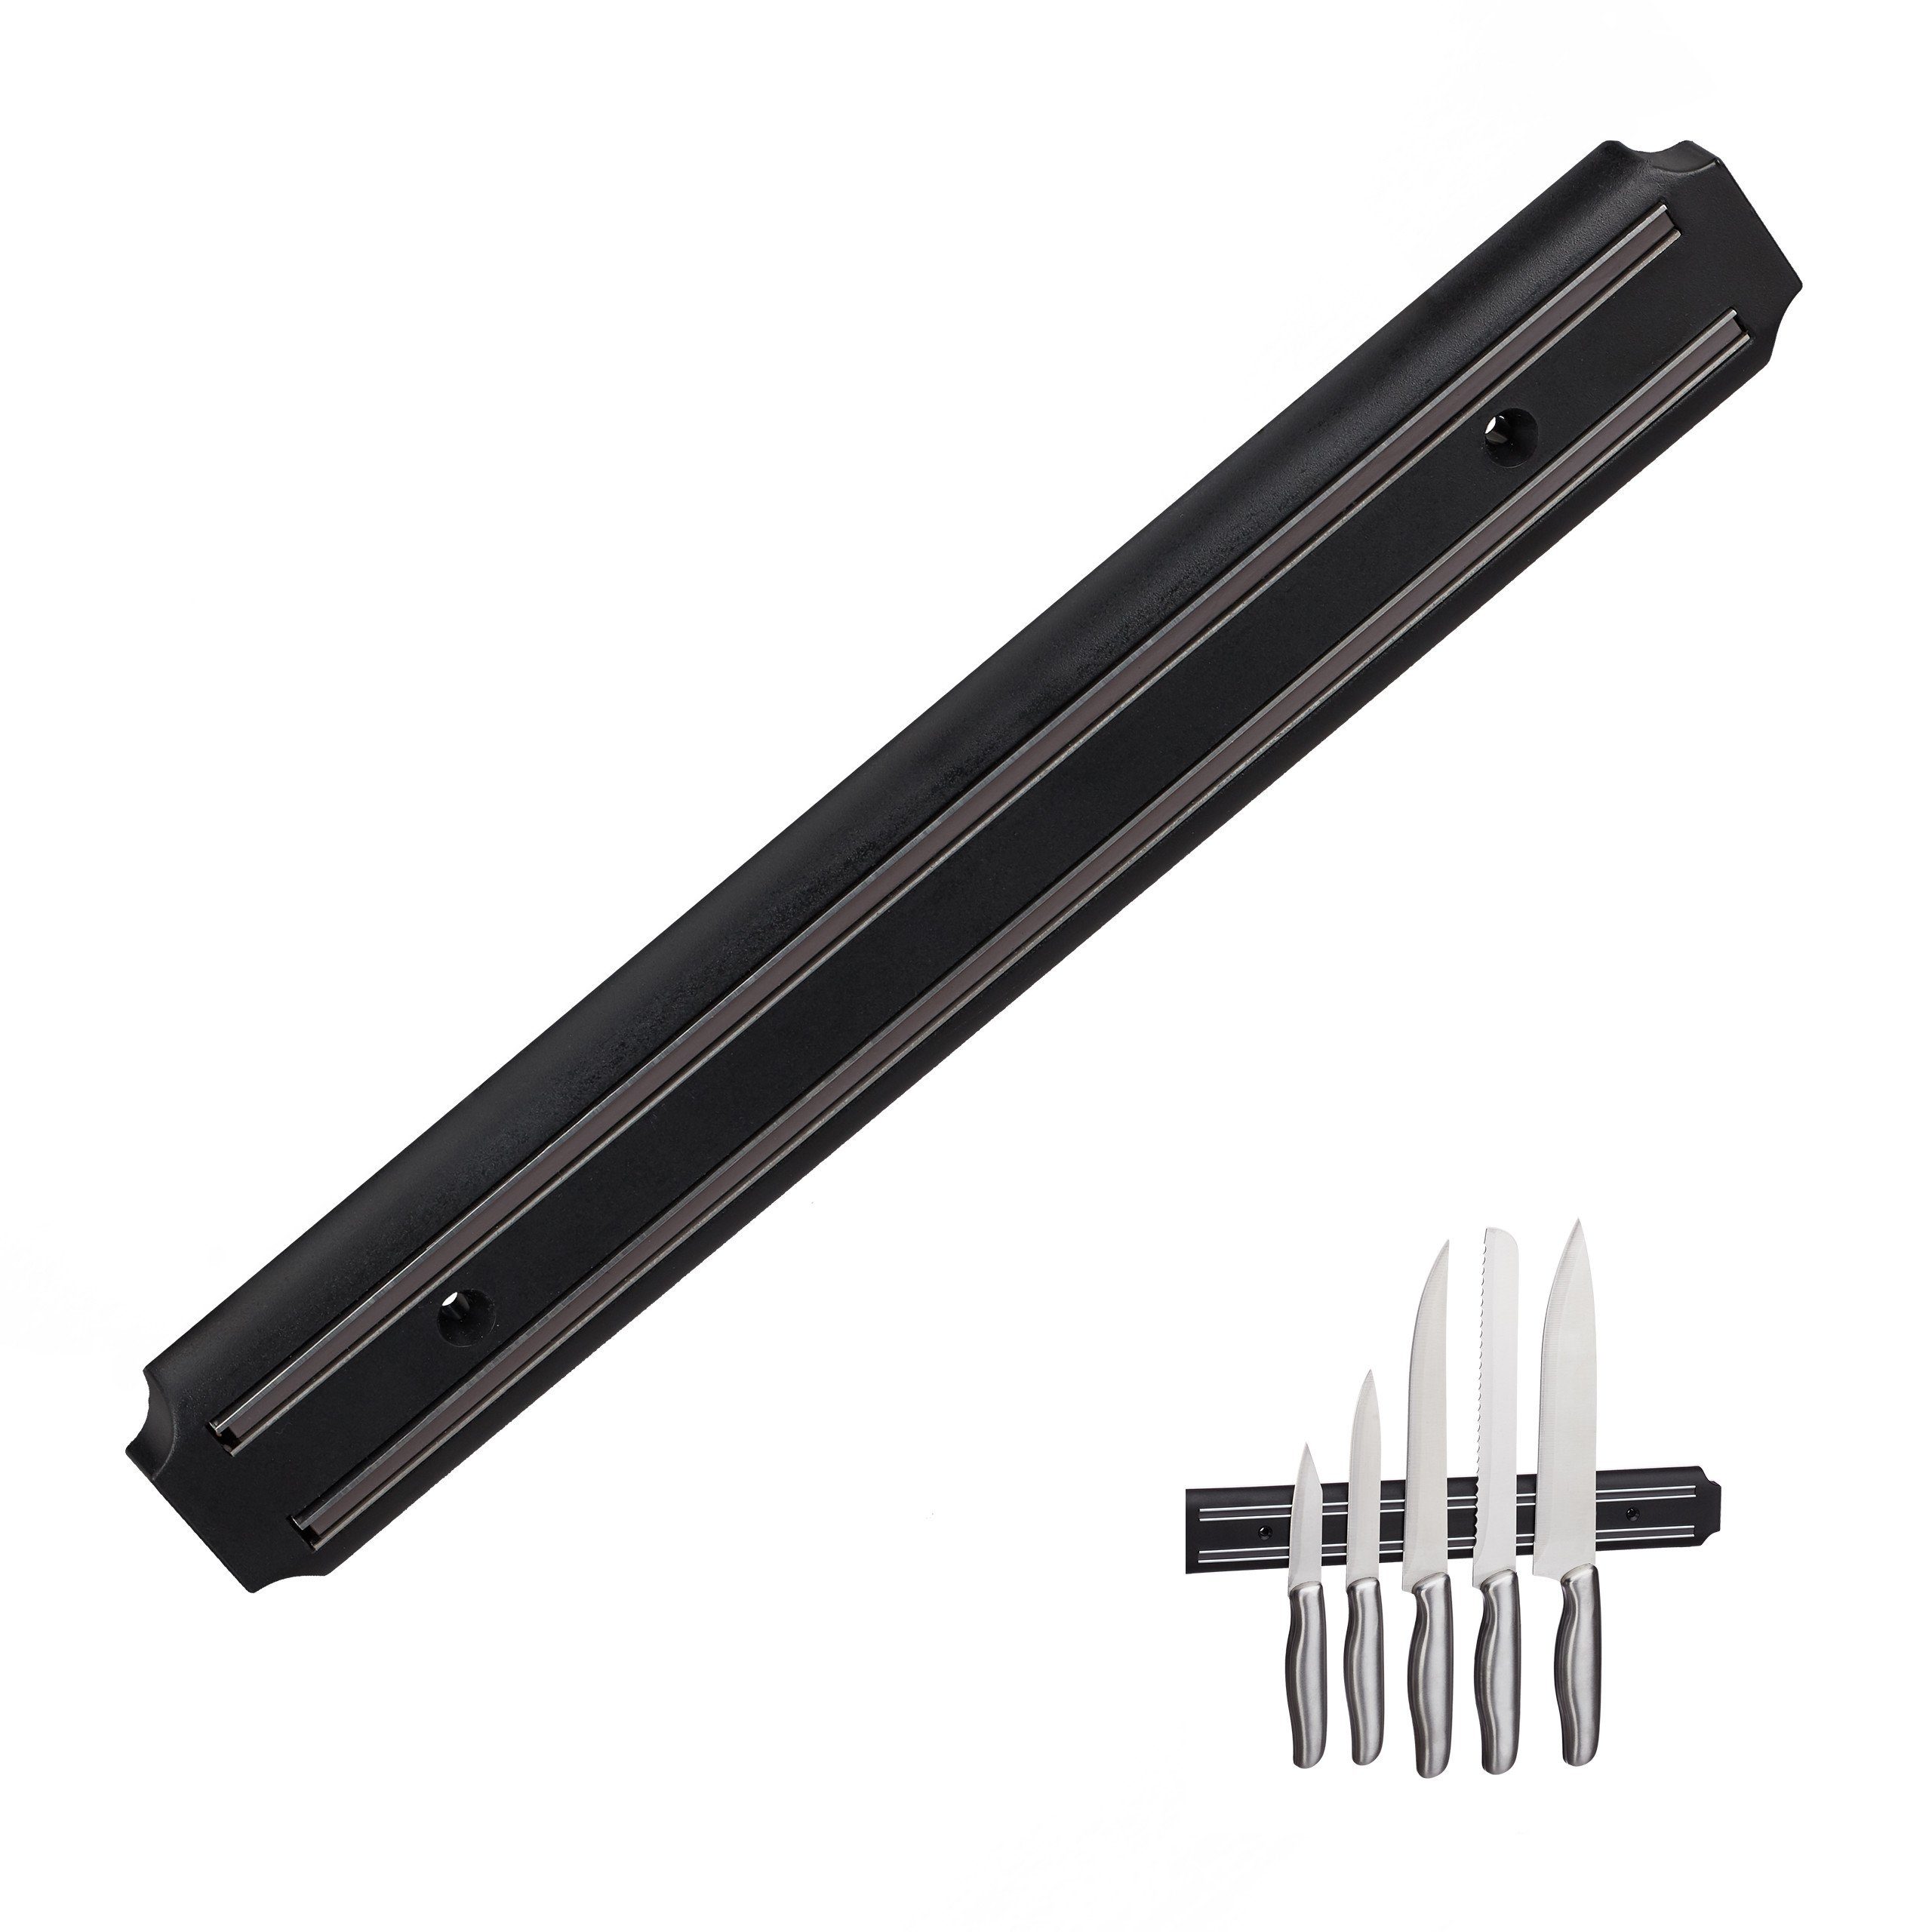 relaxdays Wand-Magnet Messer-Leiste Magnetleiste schwarz